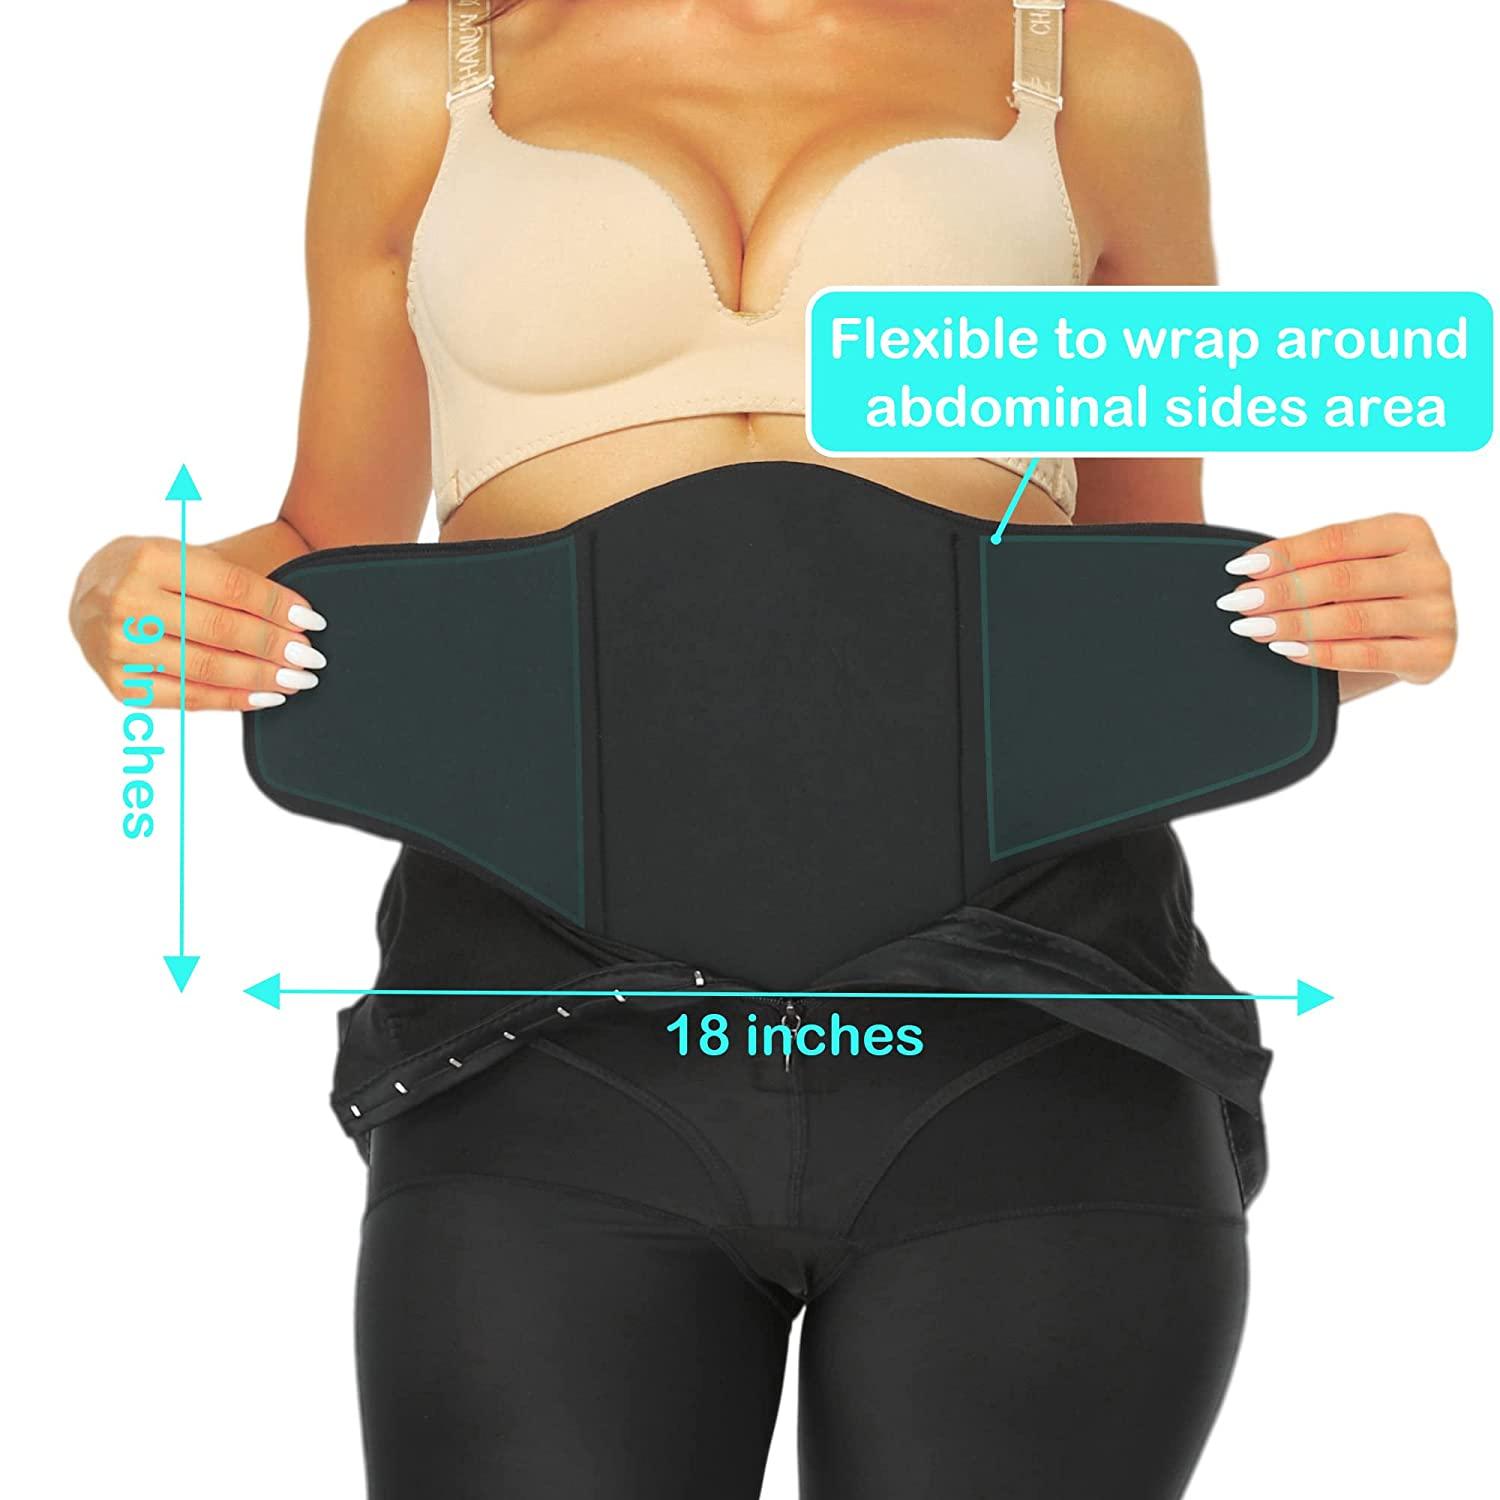 Abdominal Compression Board - After Liposuction Tummy Tuck